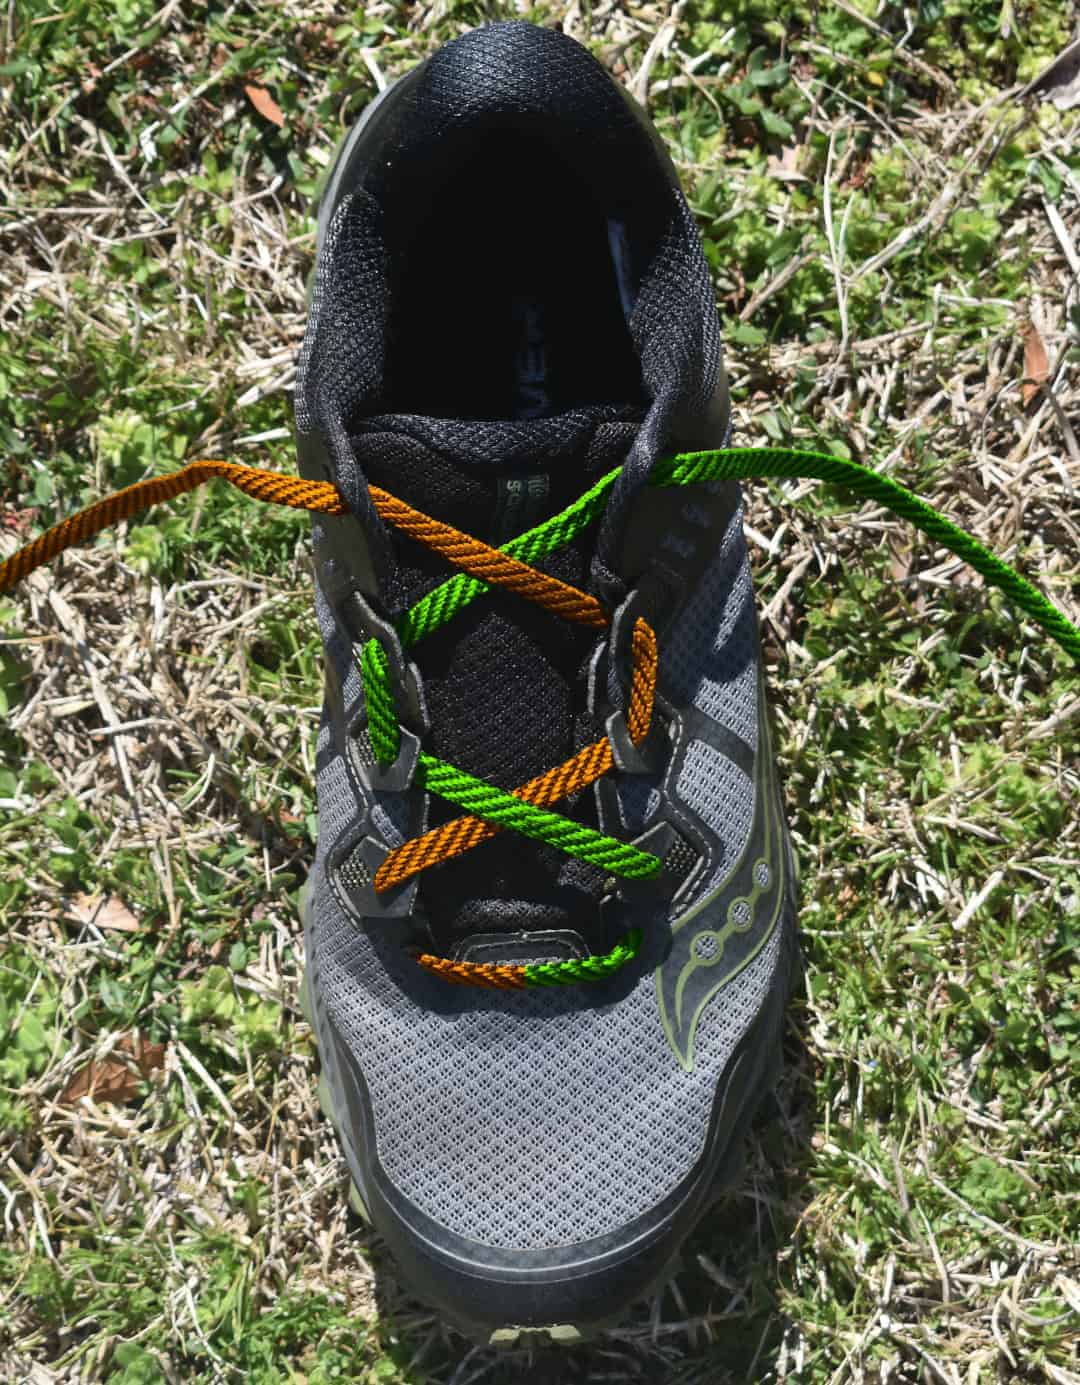 How to make your hiking shoes more comfortable – RidgeTrekker